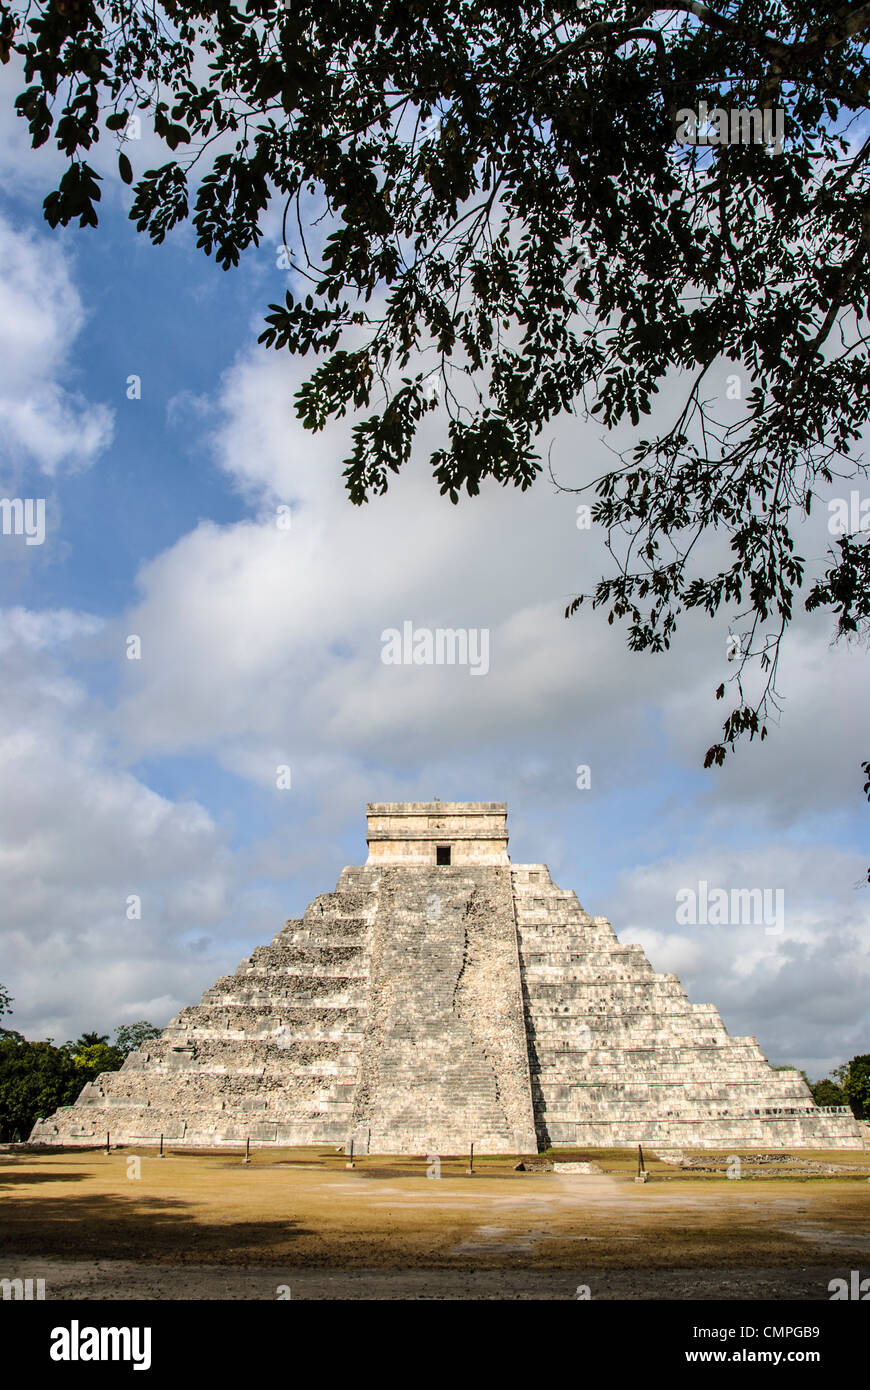 CHICHEN ITZA, Mexico - Temple of Kukulkan (El Castillo) at Chichen Itza Archeological Zone, ruins of a major Maya civilization city in the heart of Mexico's Yucatan Peninsula. Stock Photo